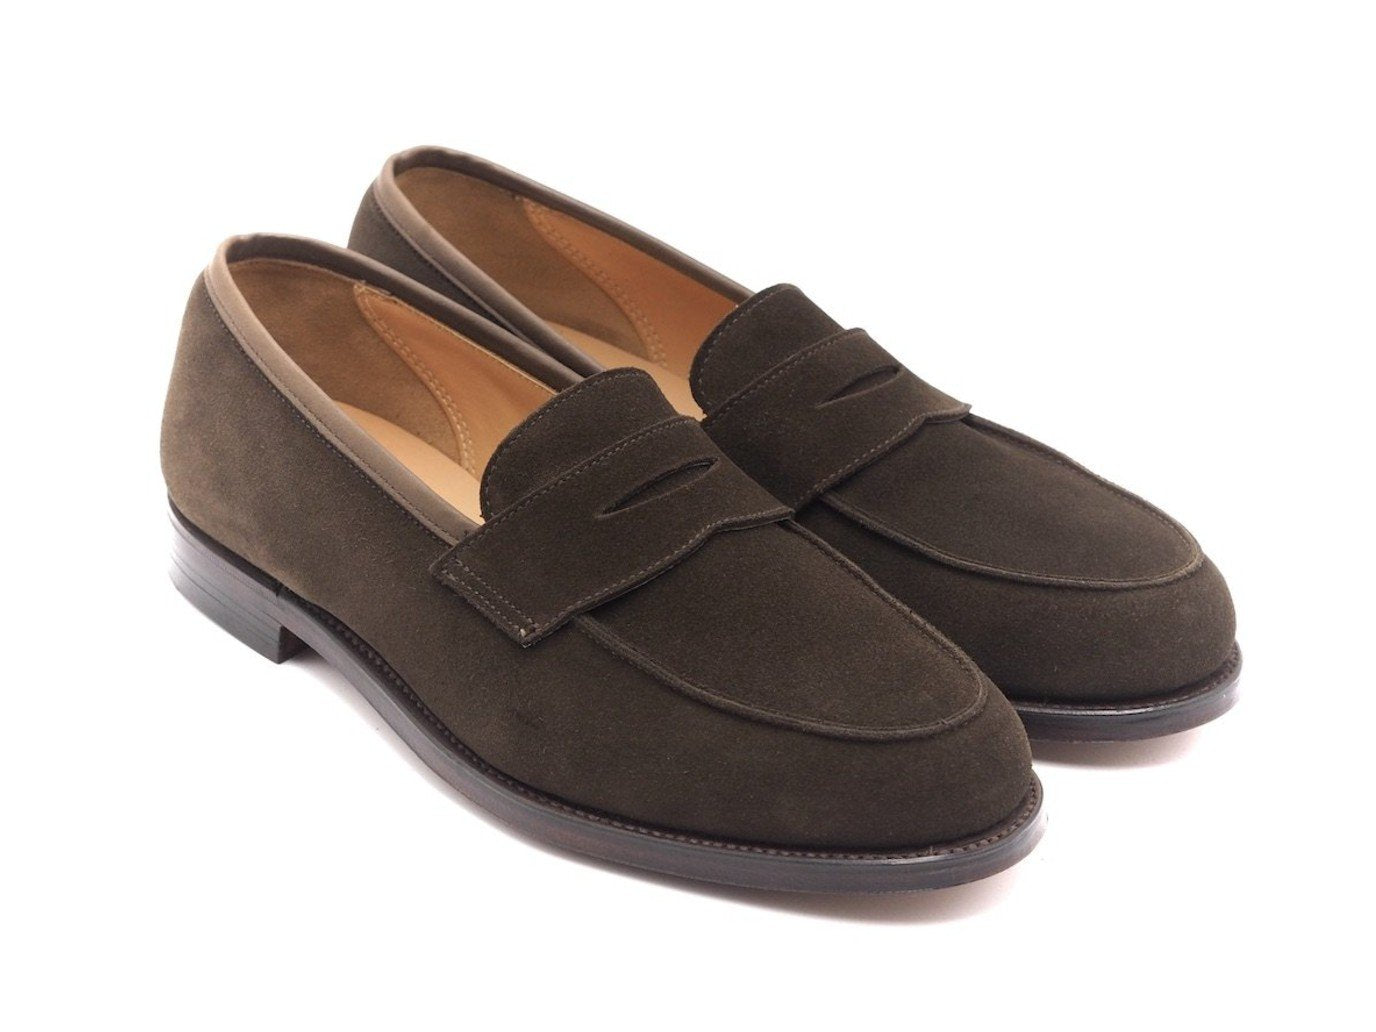 Front angle view of Crockett & Jones Kirribilli penny loafers in dark brown suede